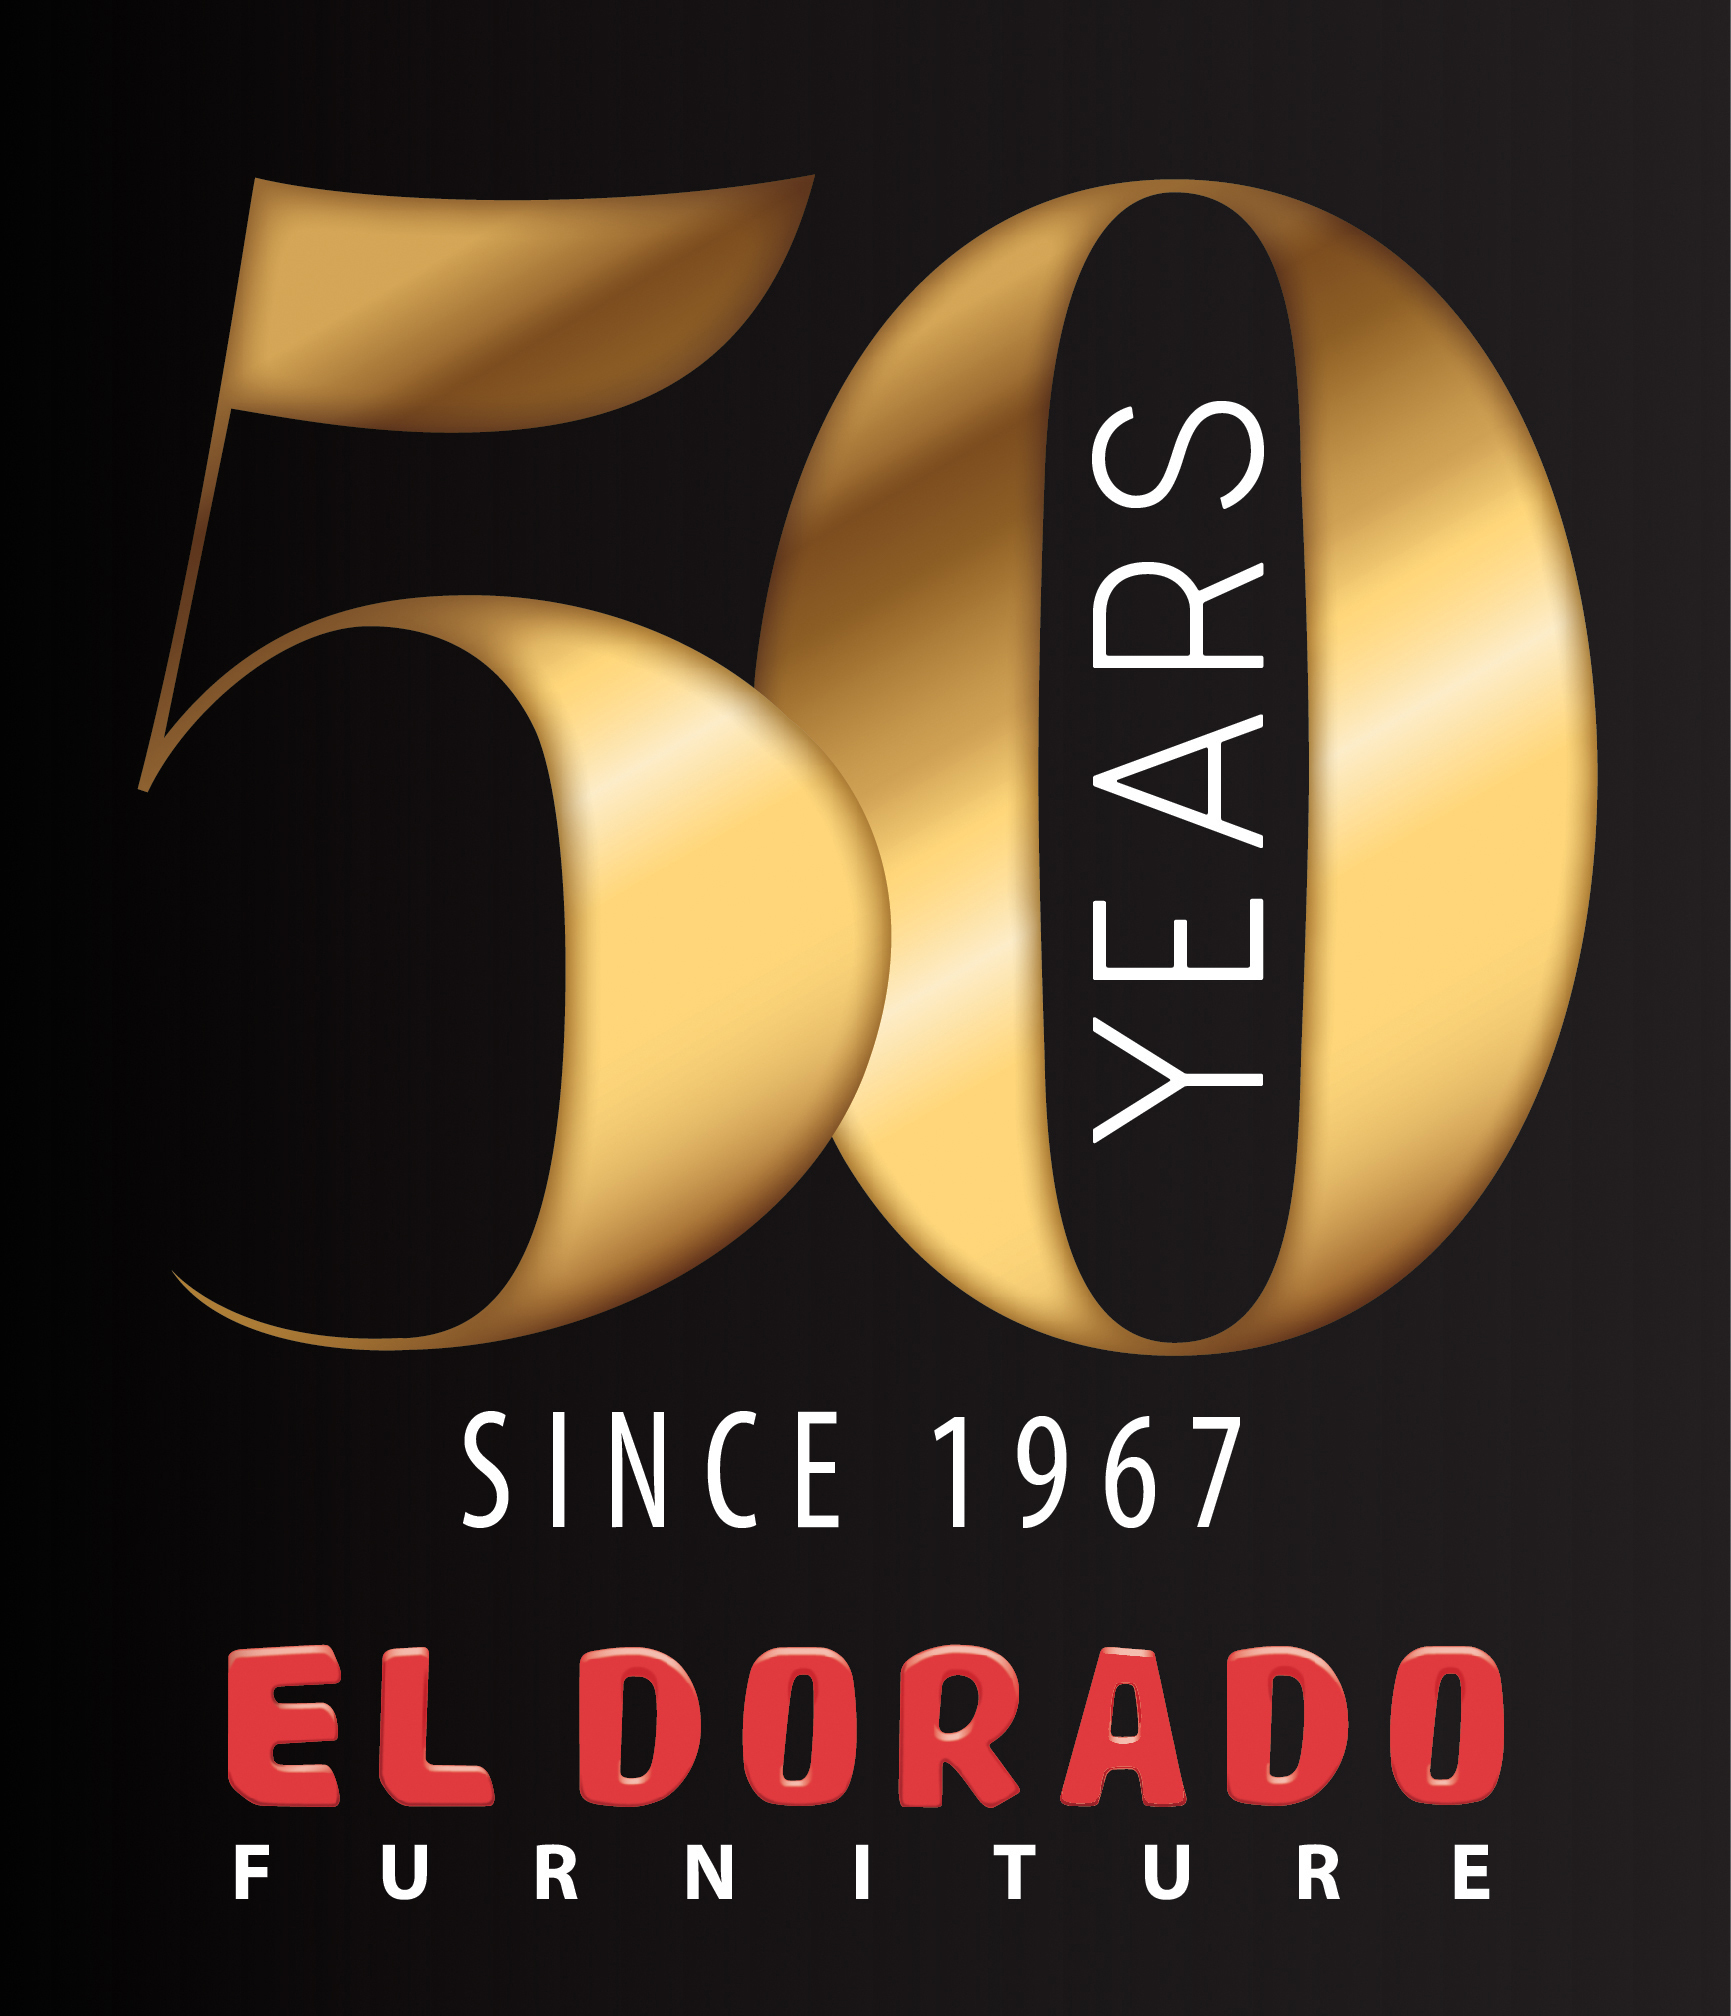 El Dorado Furniture Unveils Its 50th Year Anniversary Campaign